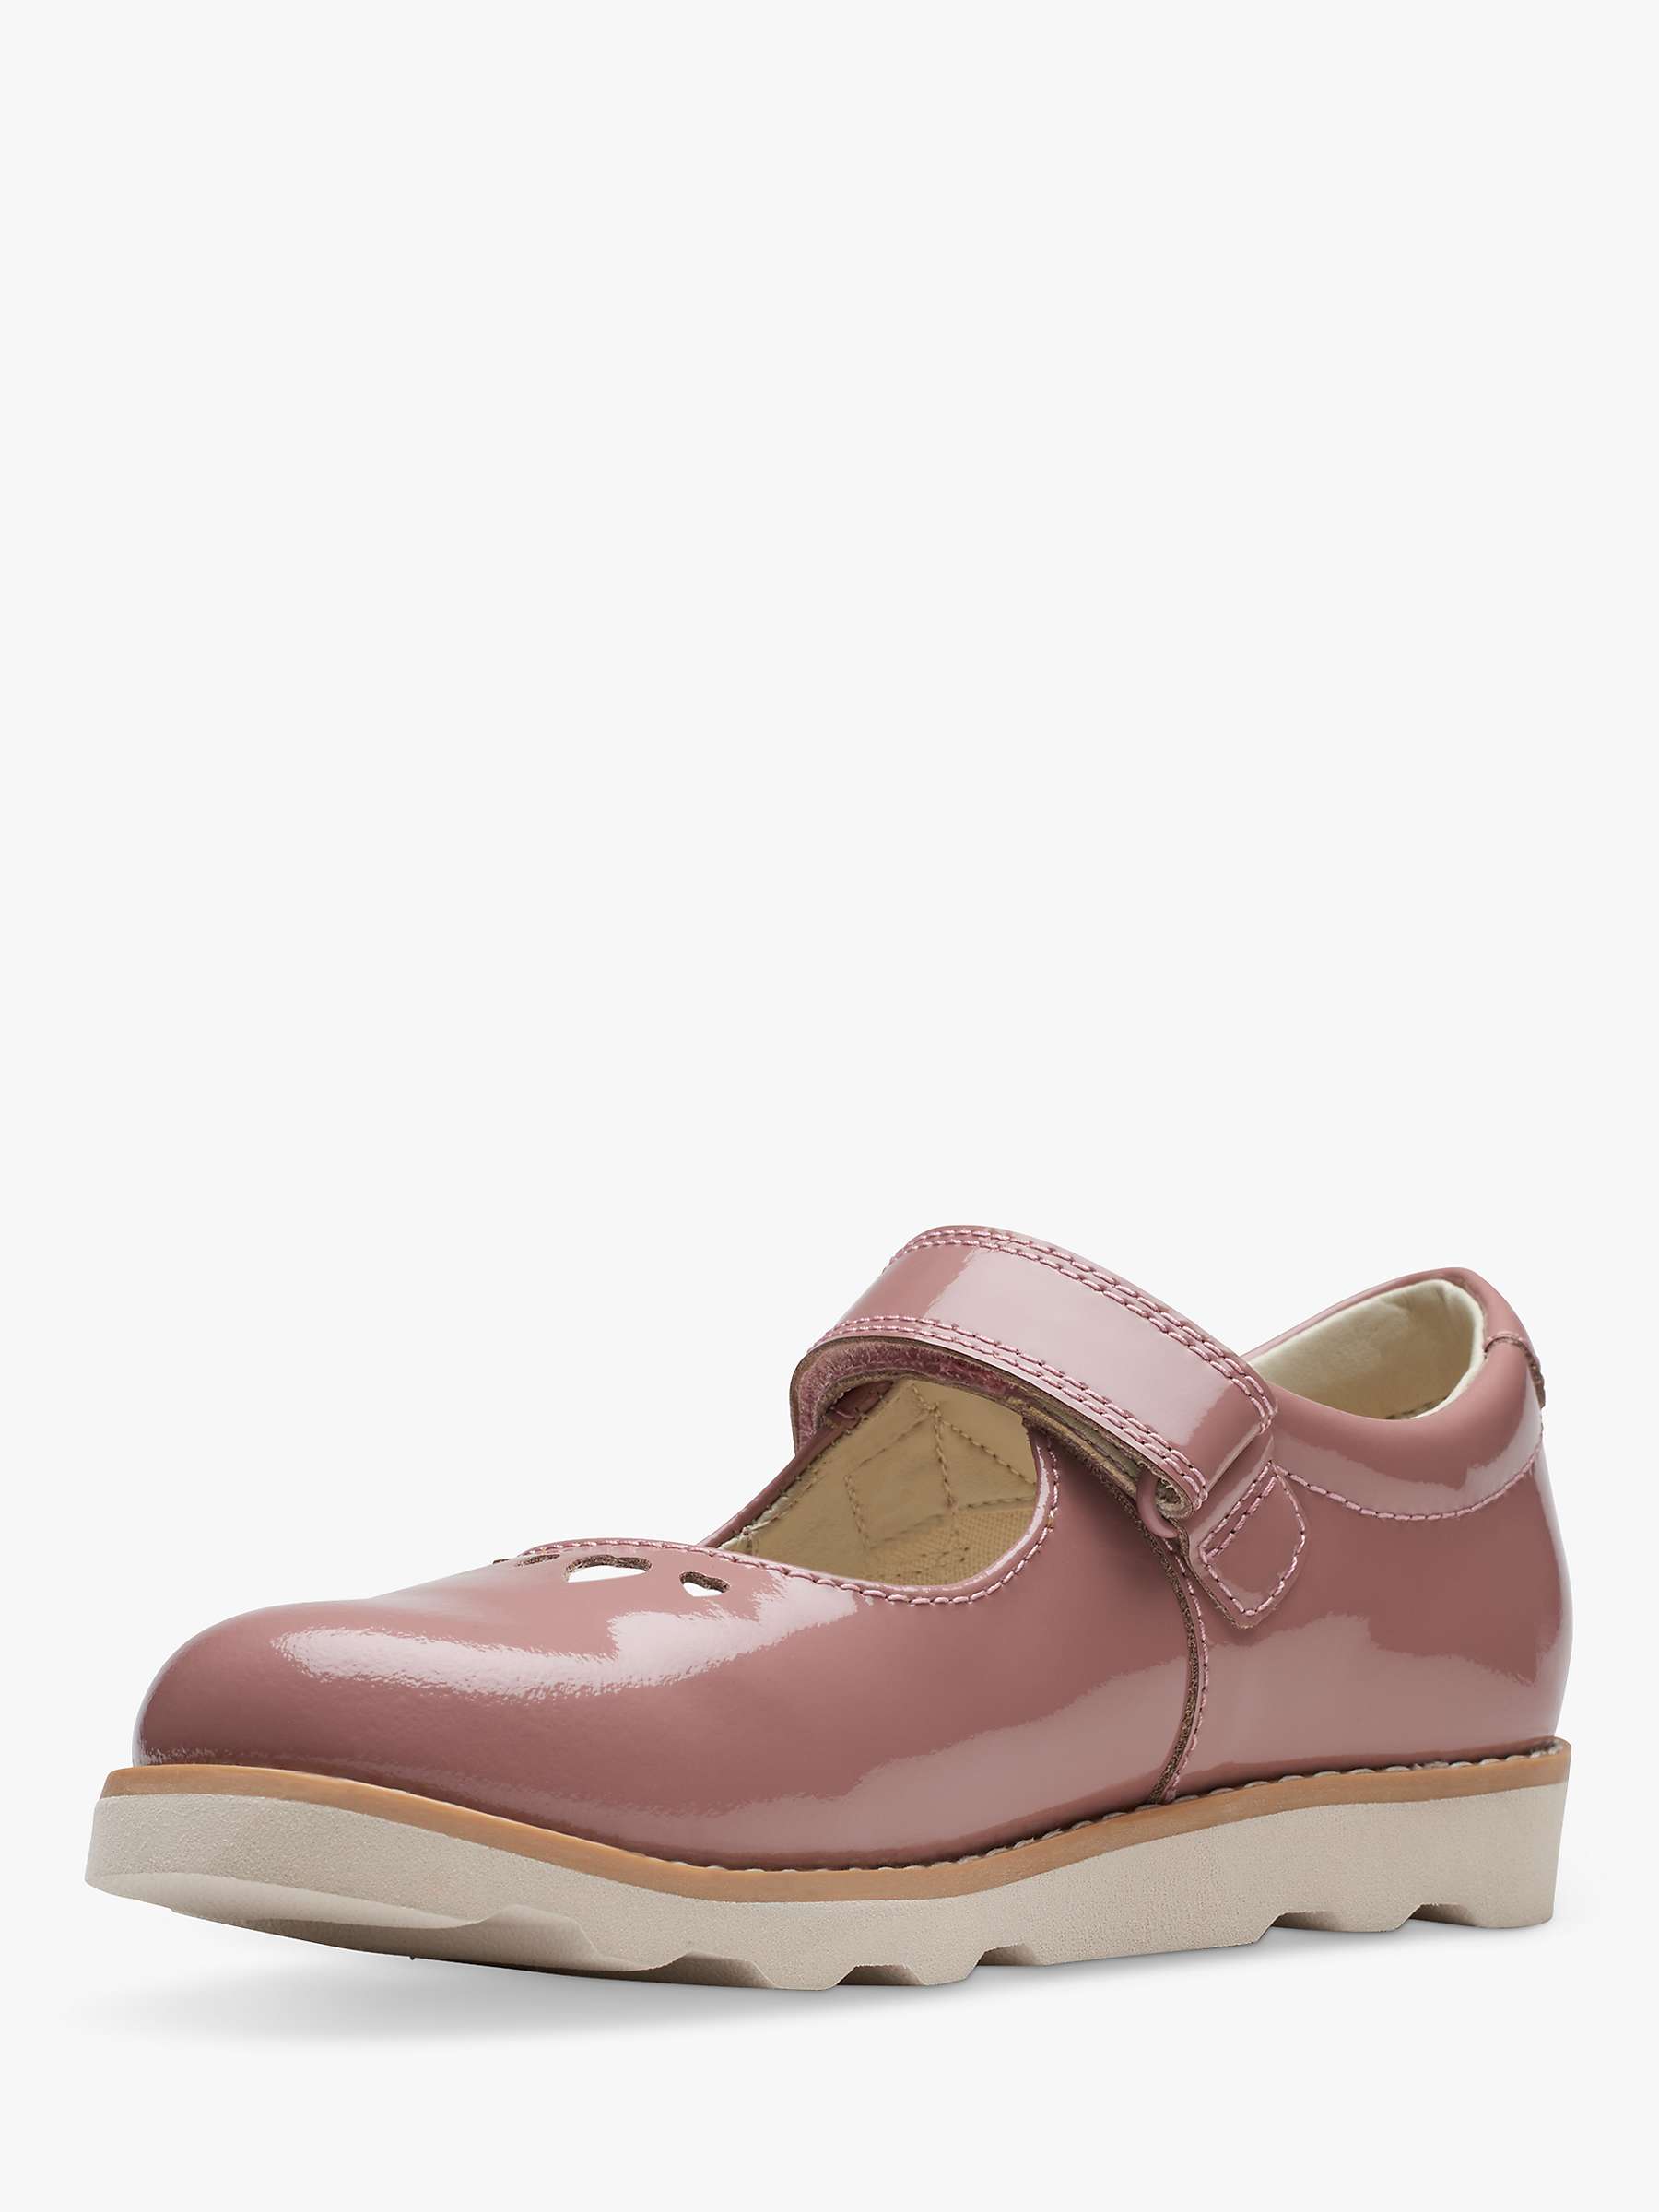 Buy Clarks Kids' Crown Jane Leather Shoes Online at johnlewis.com